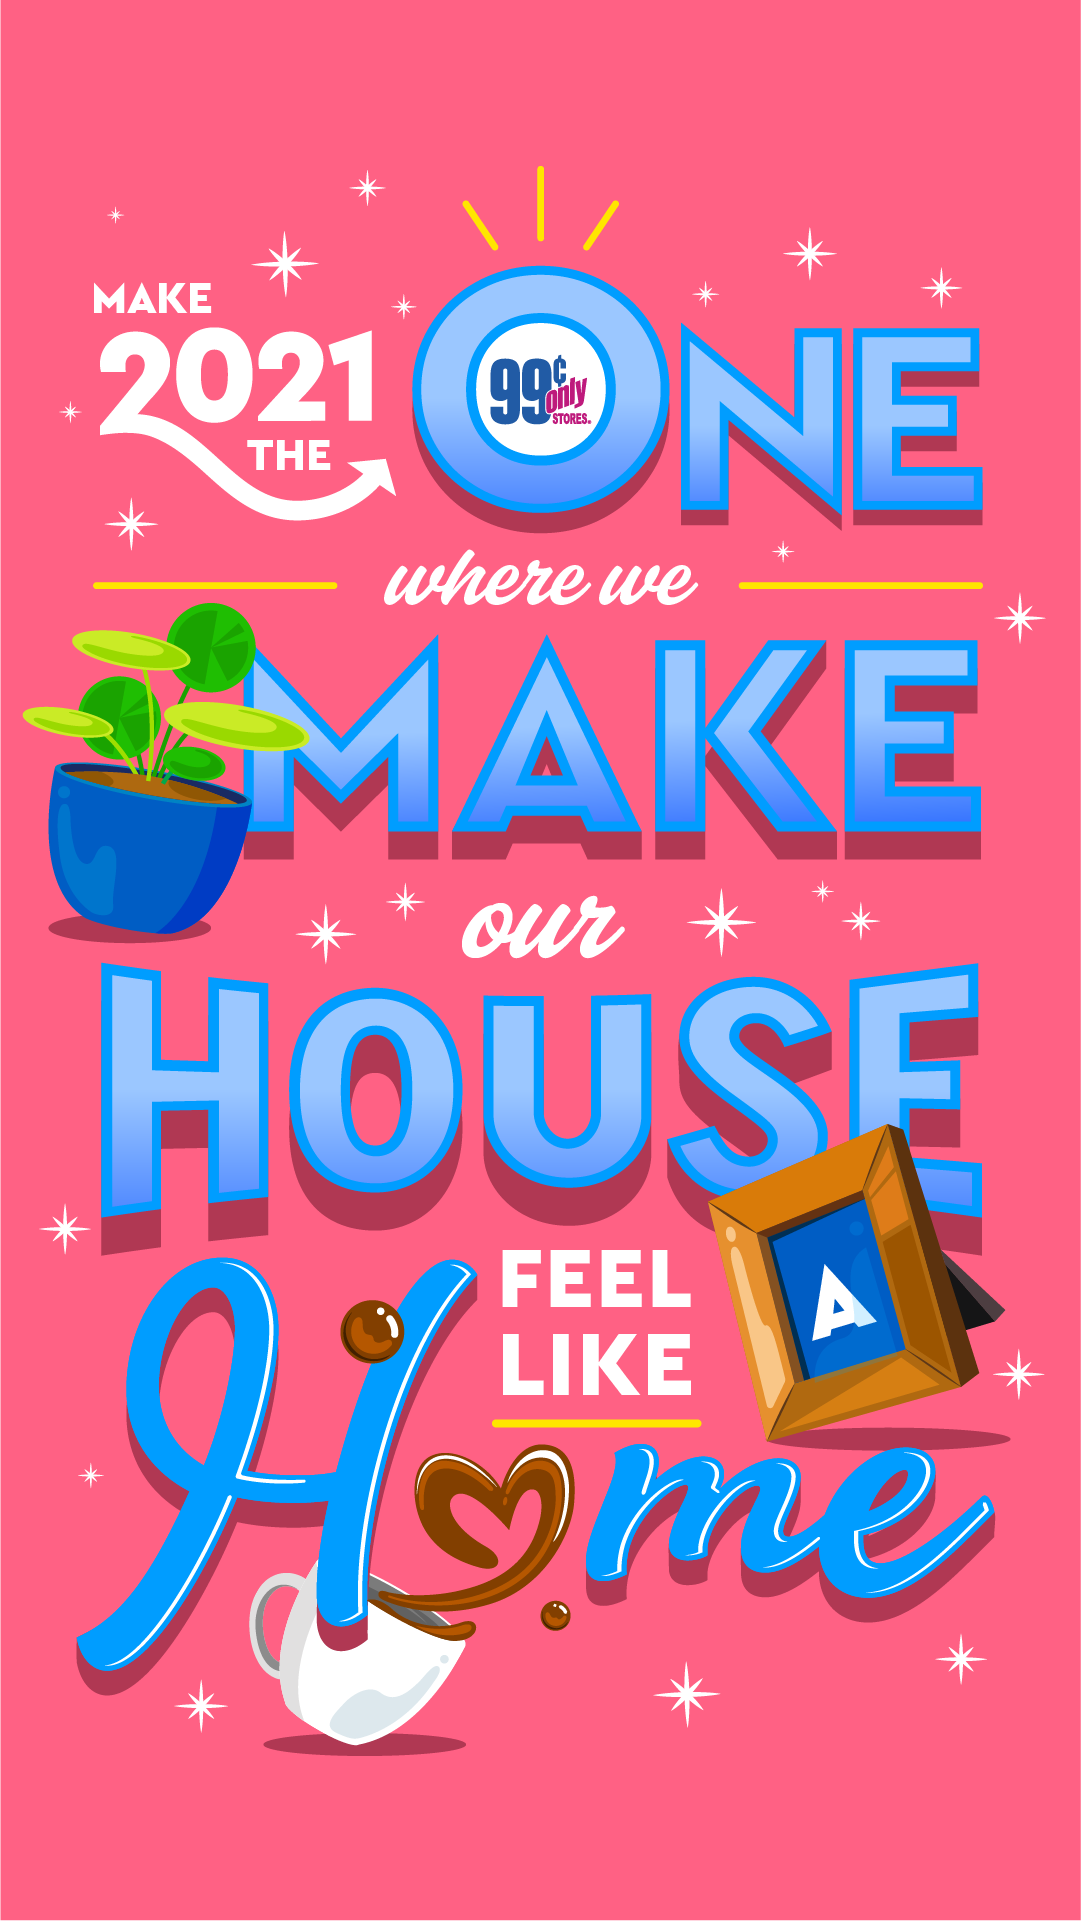 Make 2021 the One where we make our house feel like a home